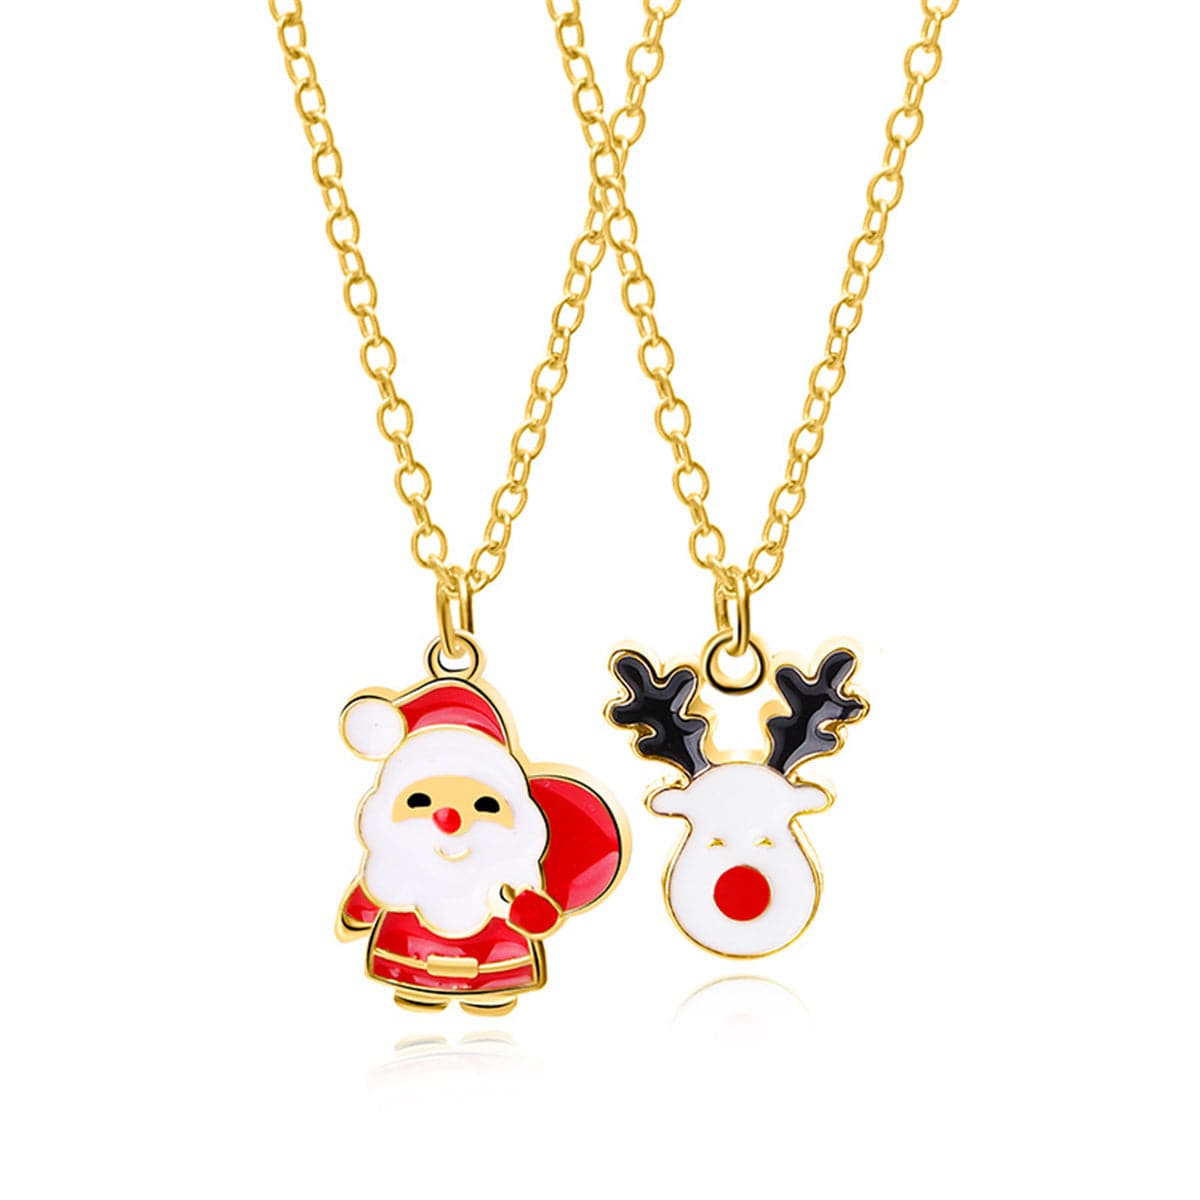 Red & 18K Gold-Plated Santa Claus & Reindeer Pendant Necklace Set